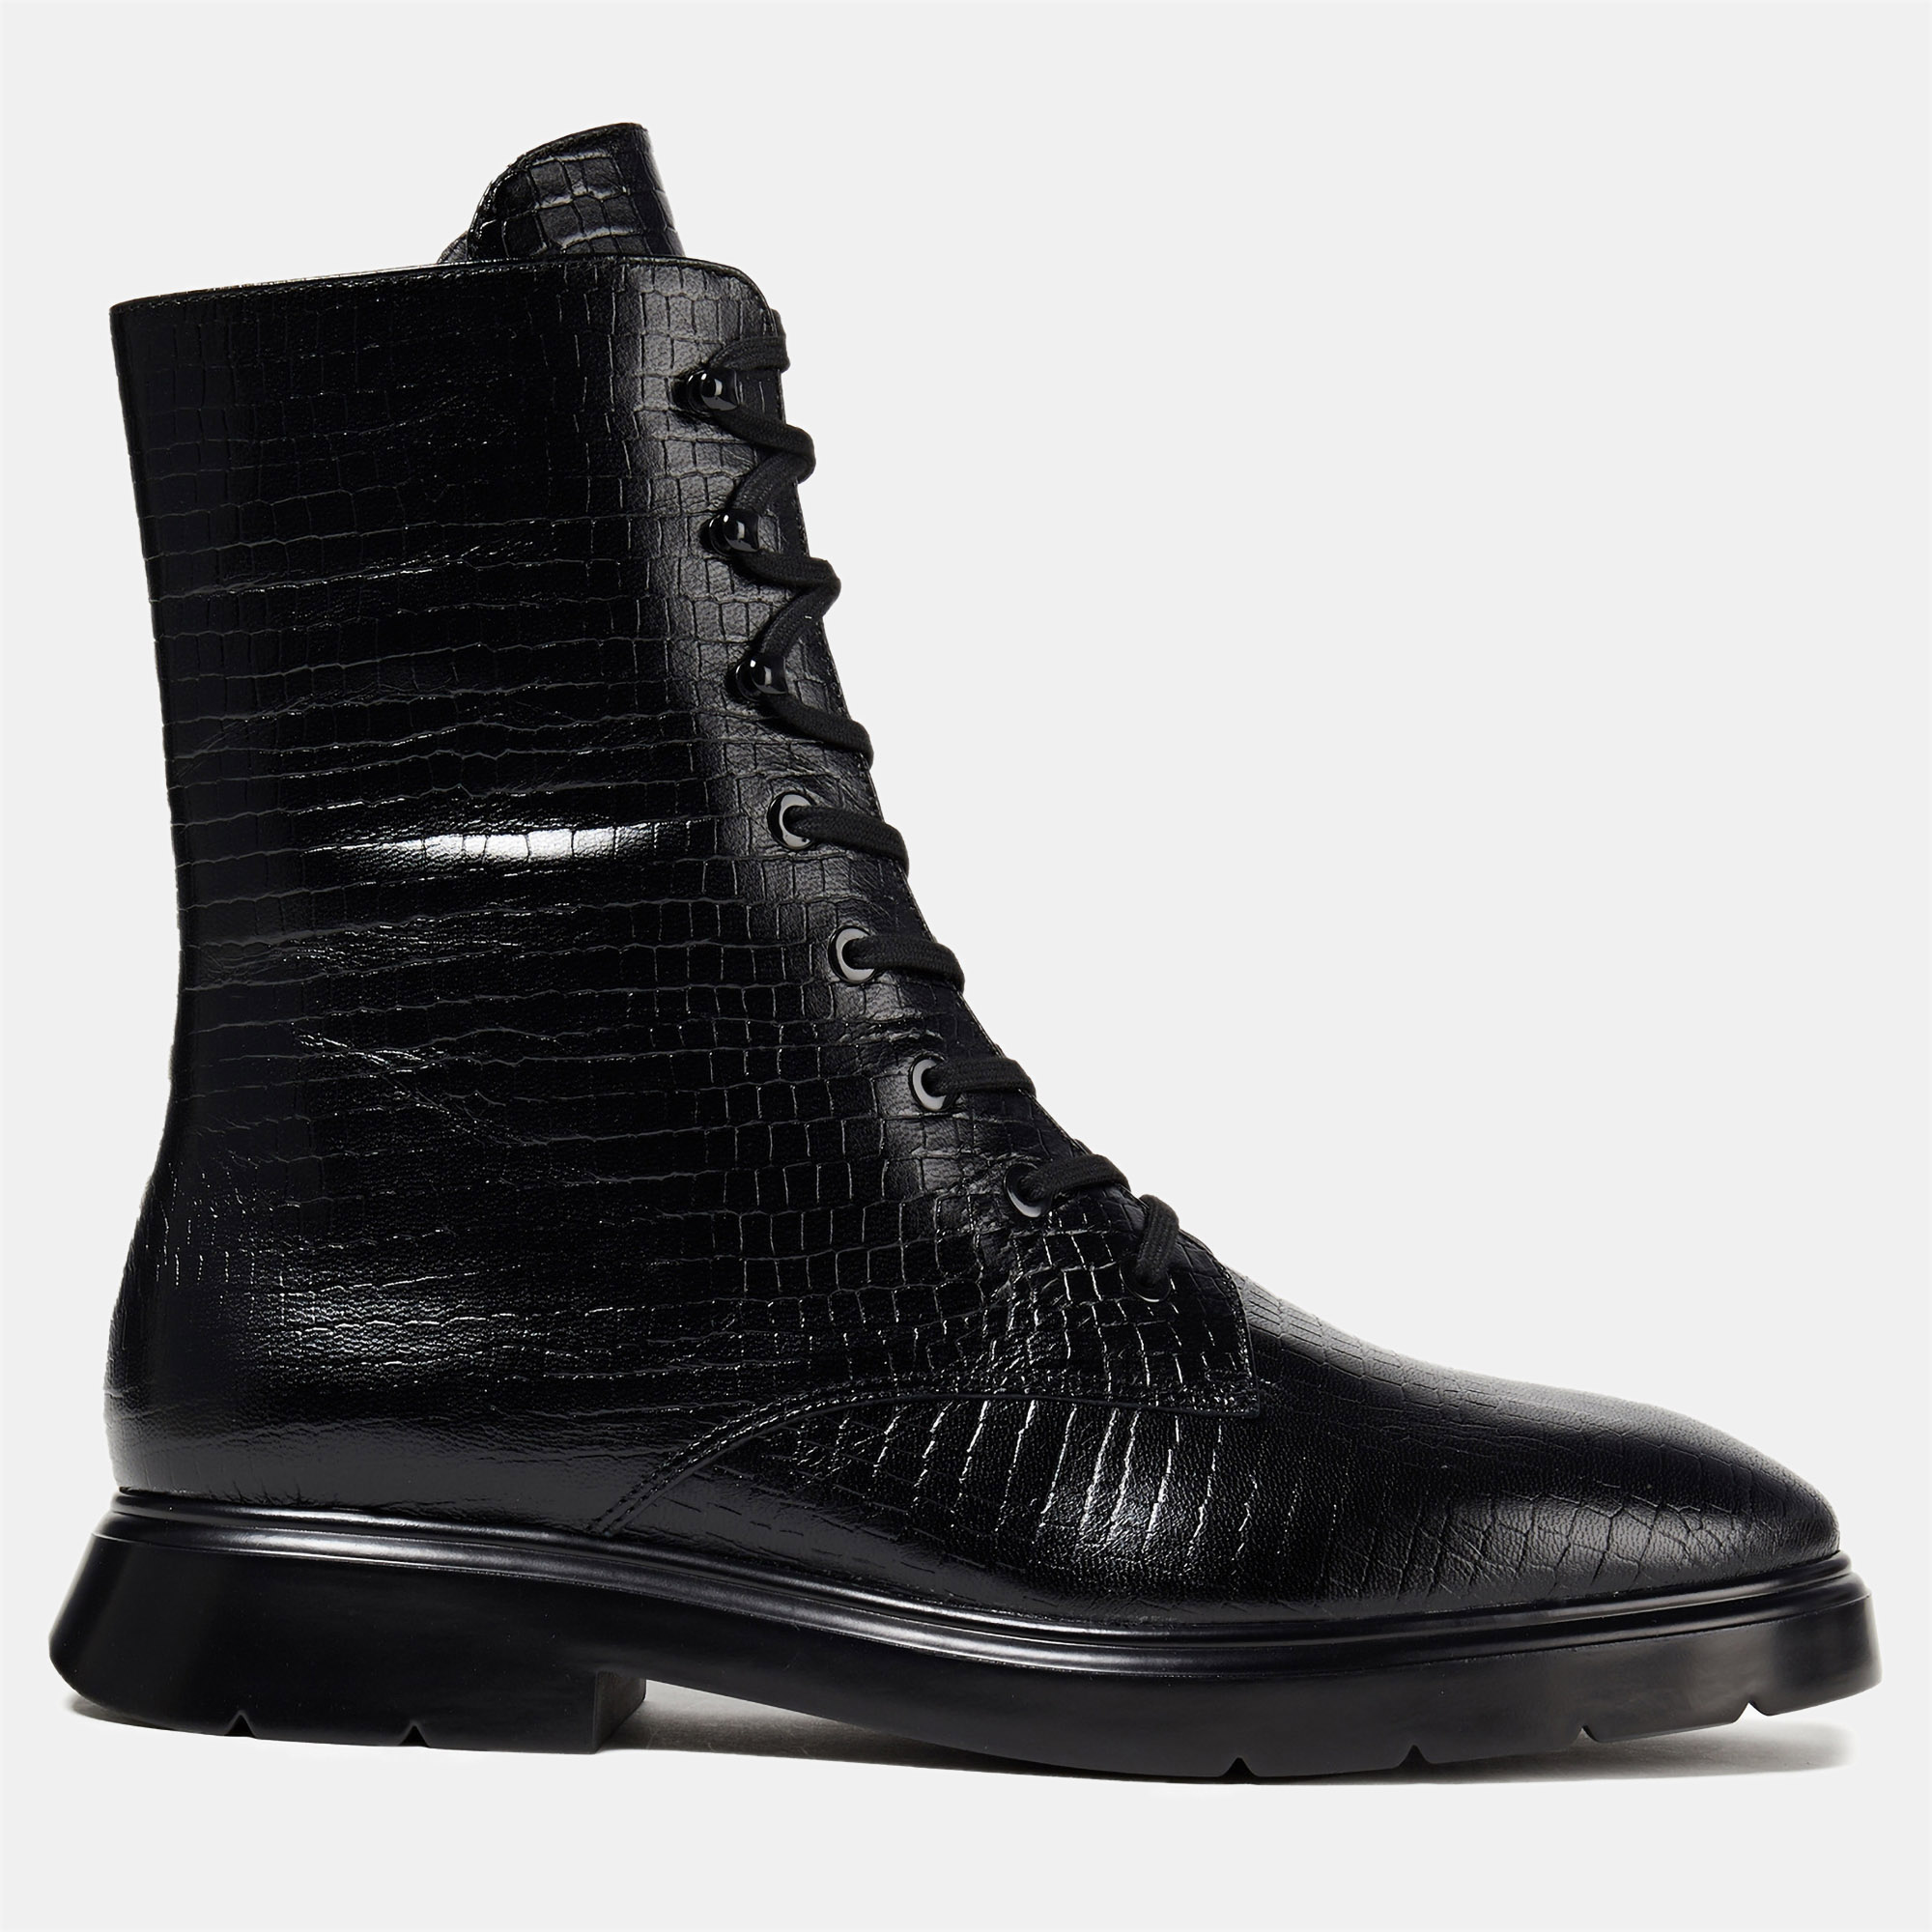 Stuart weitzman leather ankle boots size 36.5